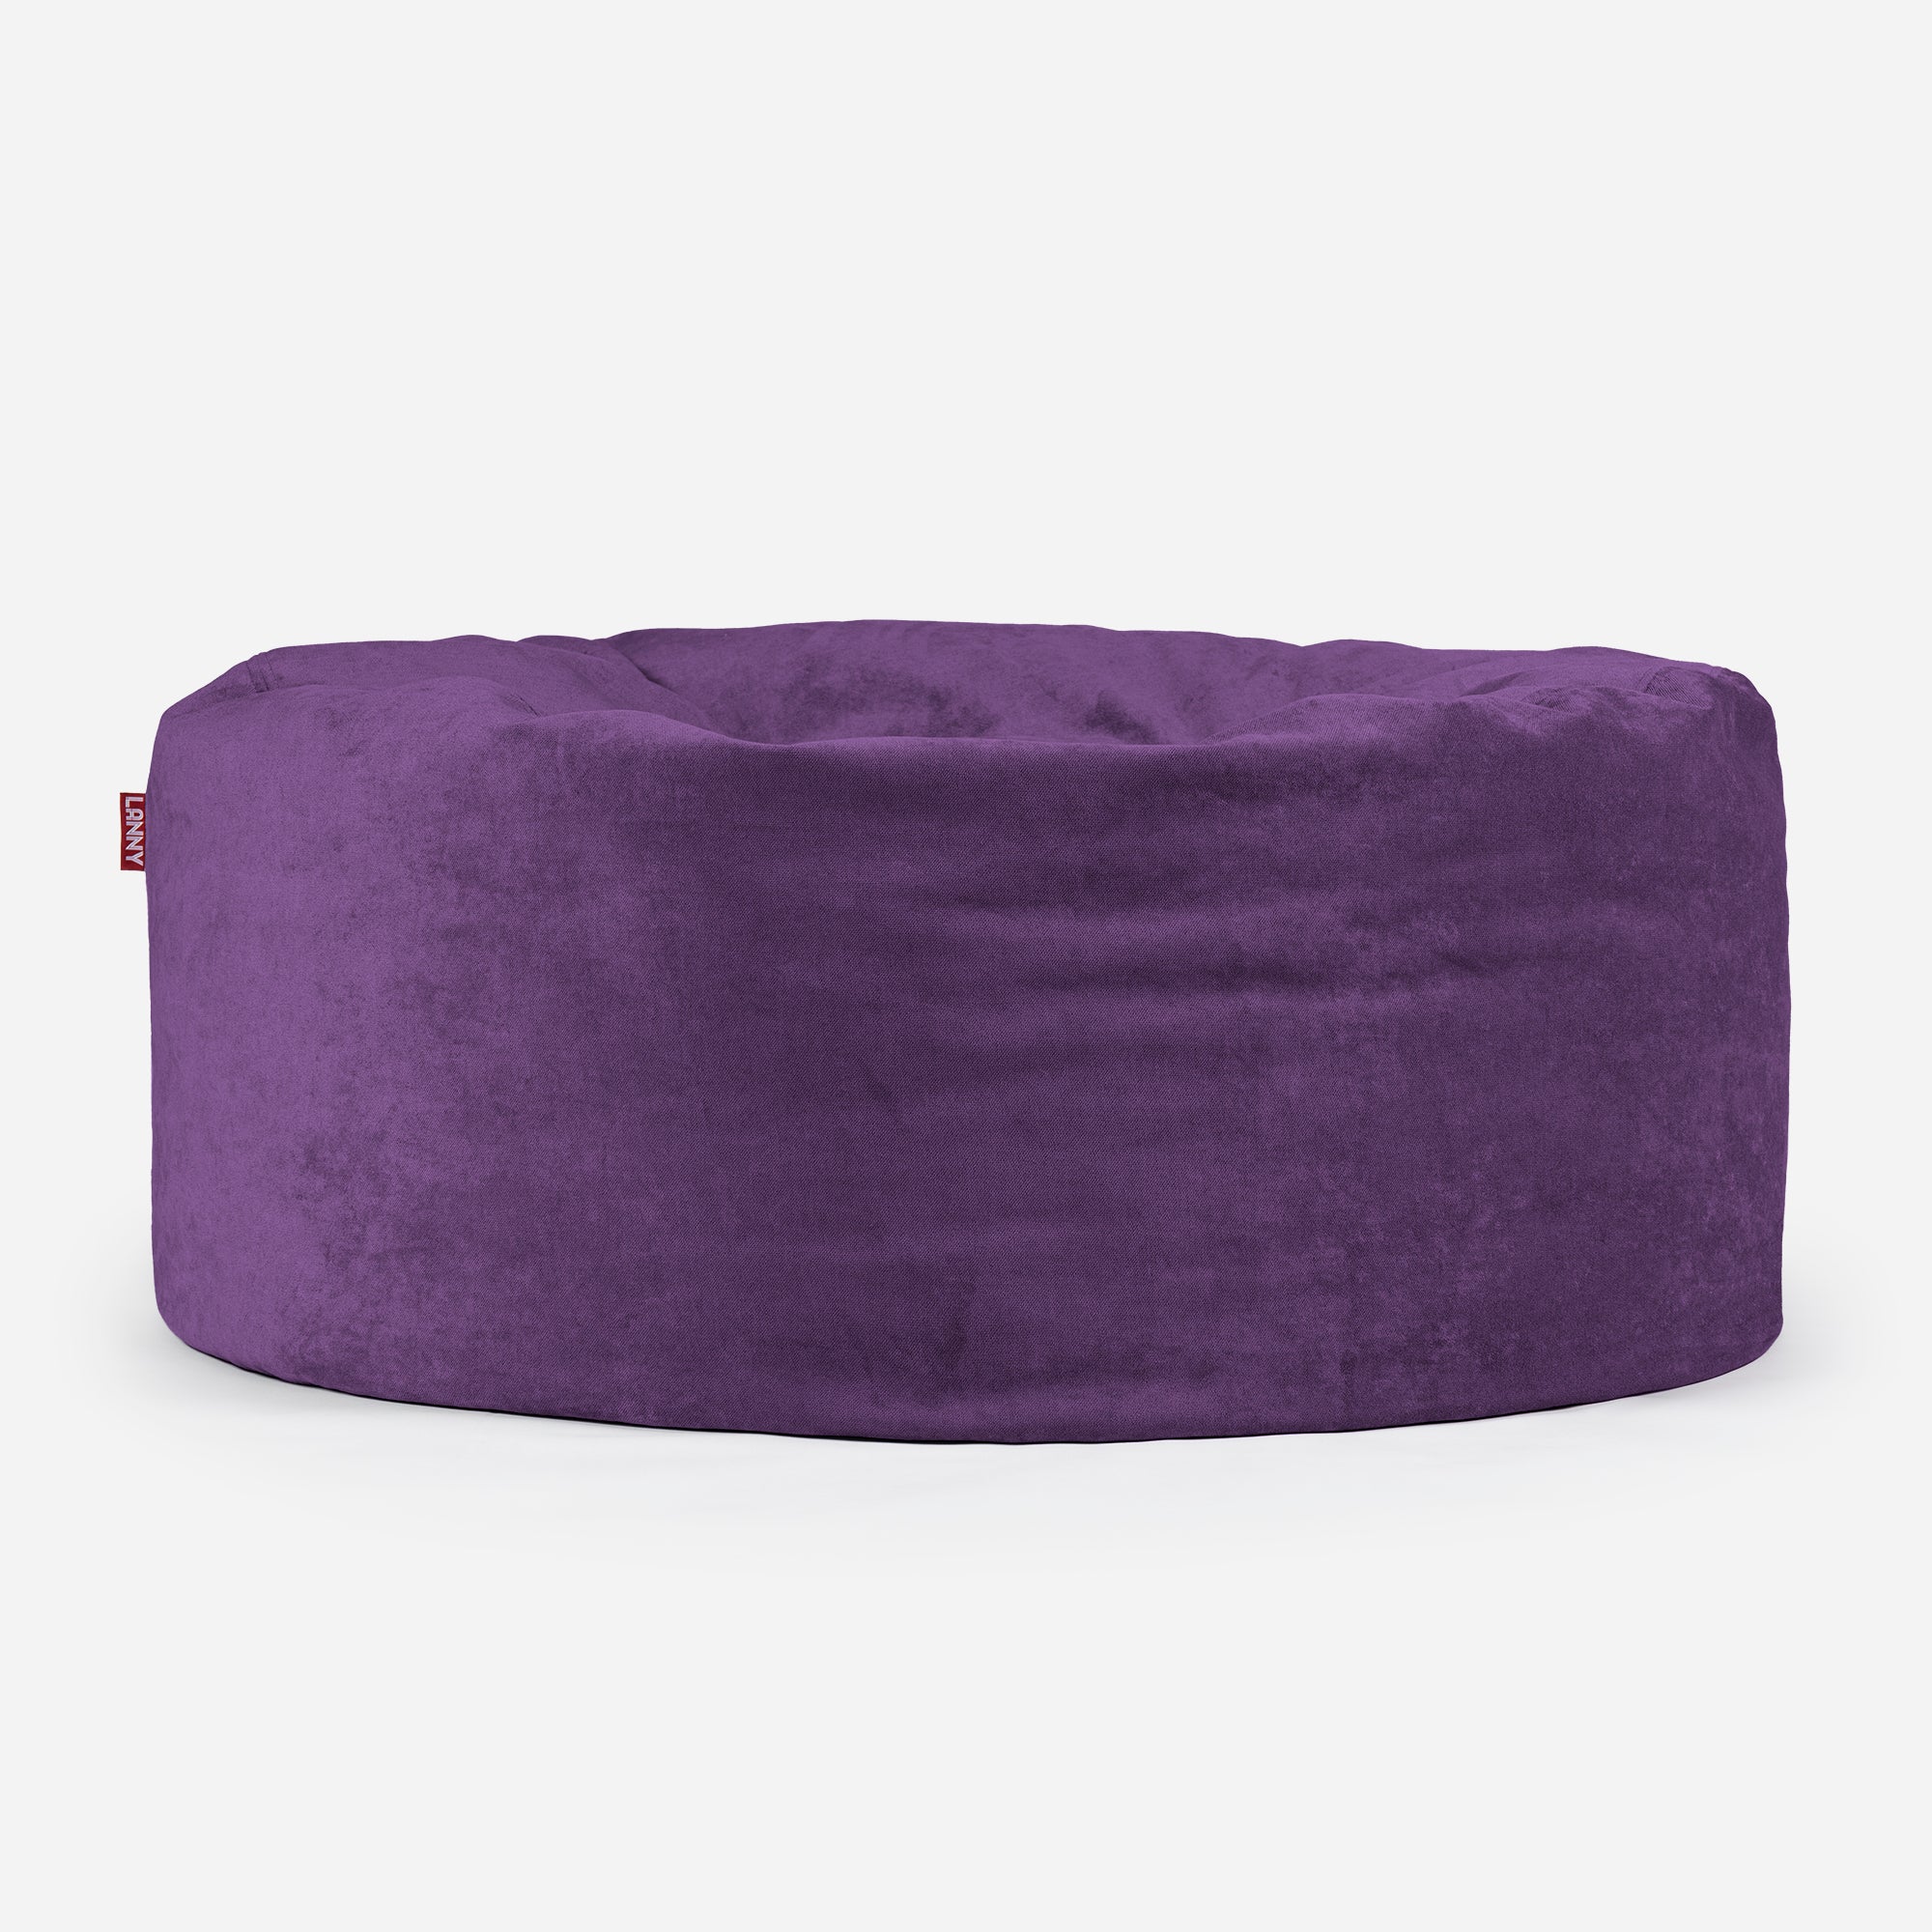 Large Original Aldo Violet Bean Bag